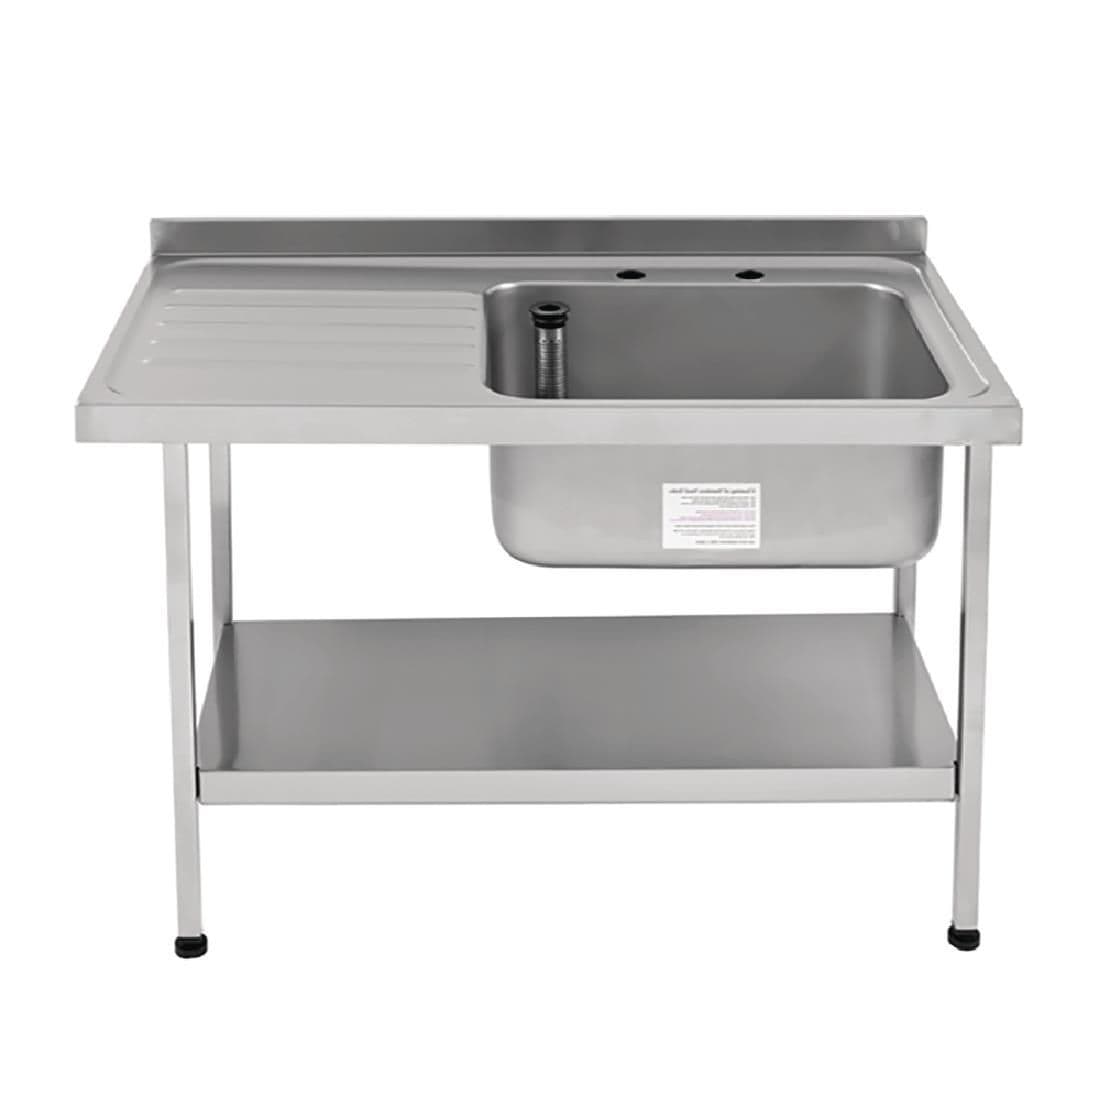 Franke Sissons Self Assembly Stainless Steel Sink Left Hand Drainer 1200x650mm JD Catering Equipment Solutions Ltd